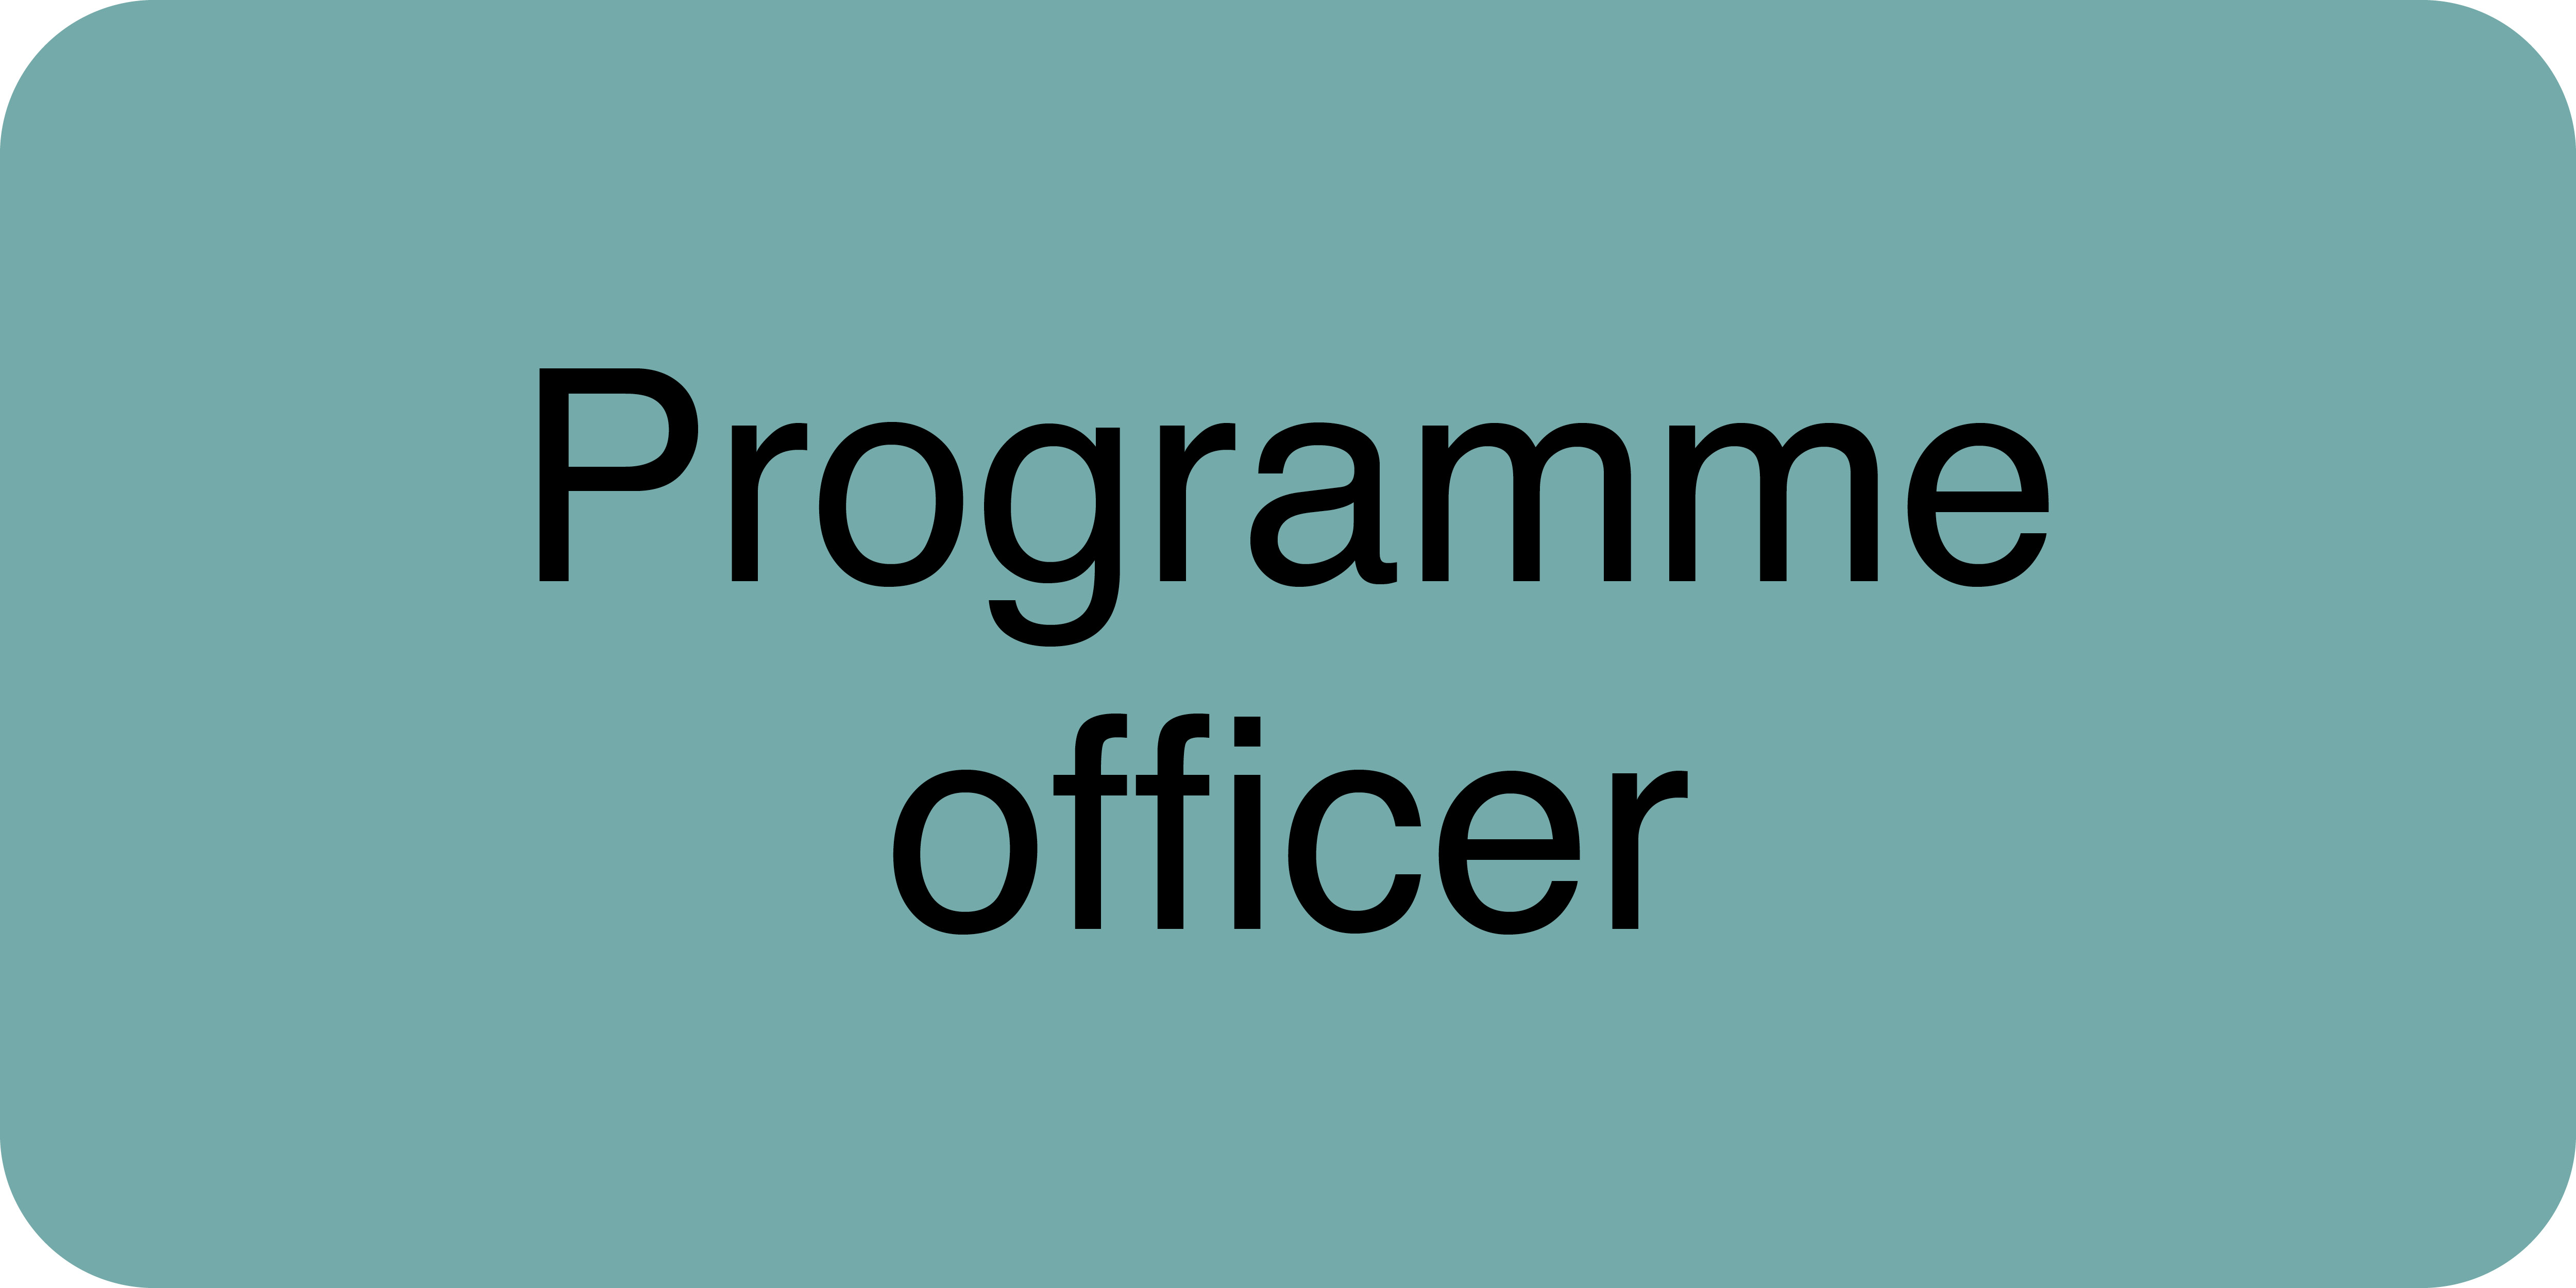 Programme officer